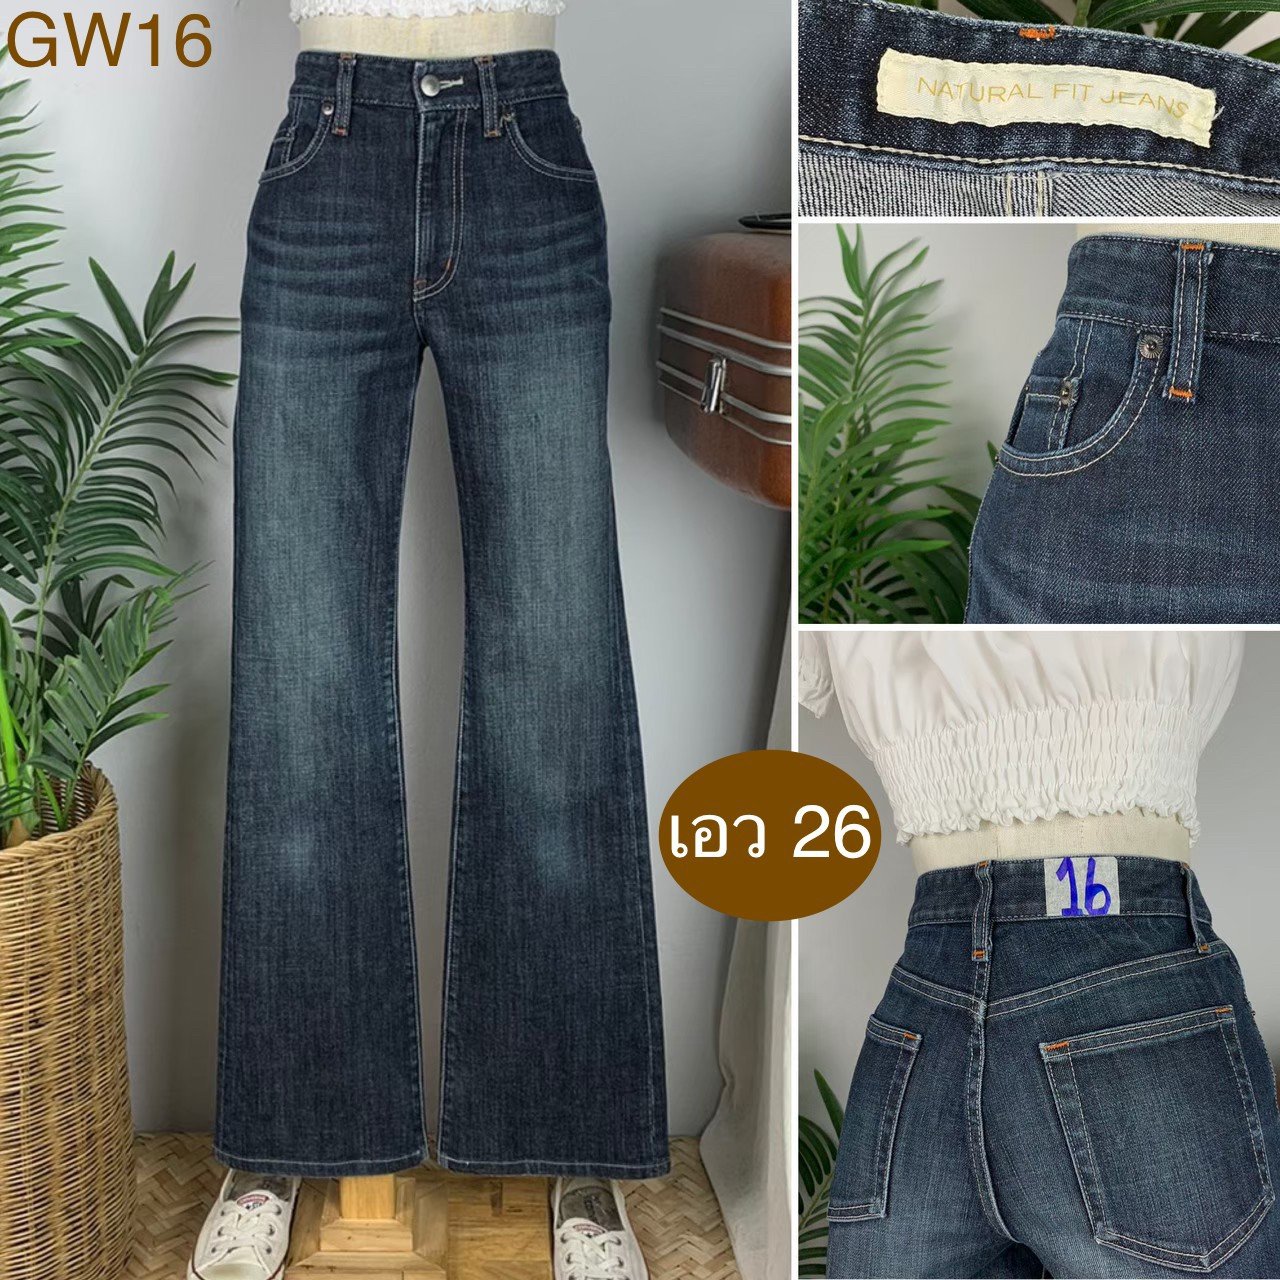 ♥️ รหัสGW16 ▪️ป้าย Natural fit Jeans  ▪️ เอว 26" สะโพก 33-35" ต้นขา 21" ▪️เป้า 9.5" ยาว 39" (นิ้ว)